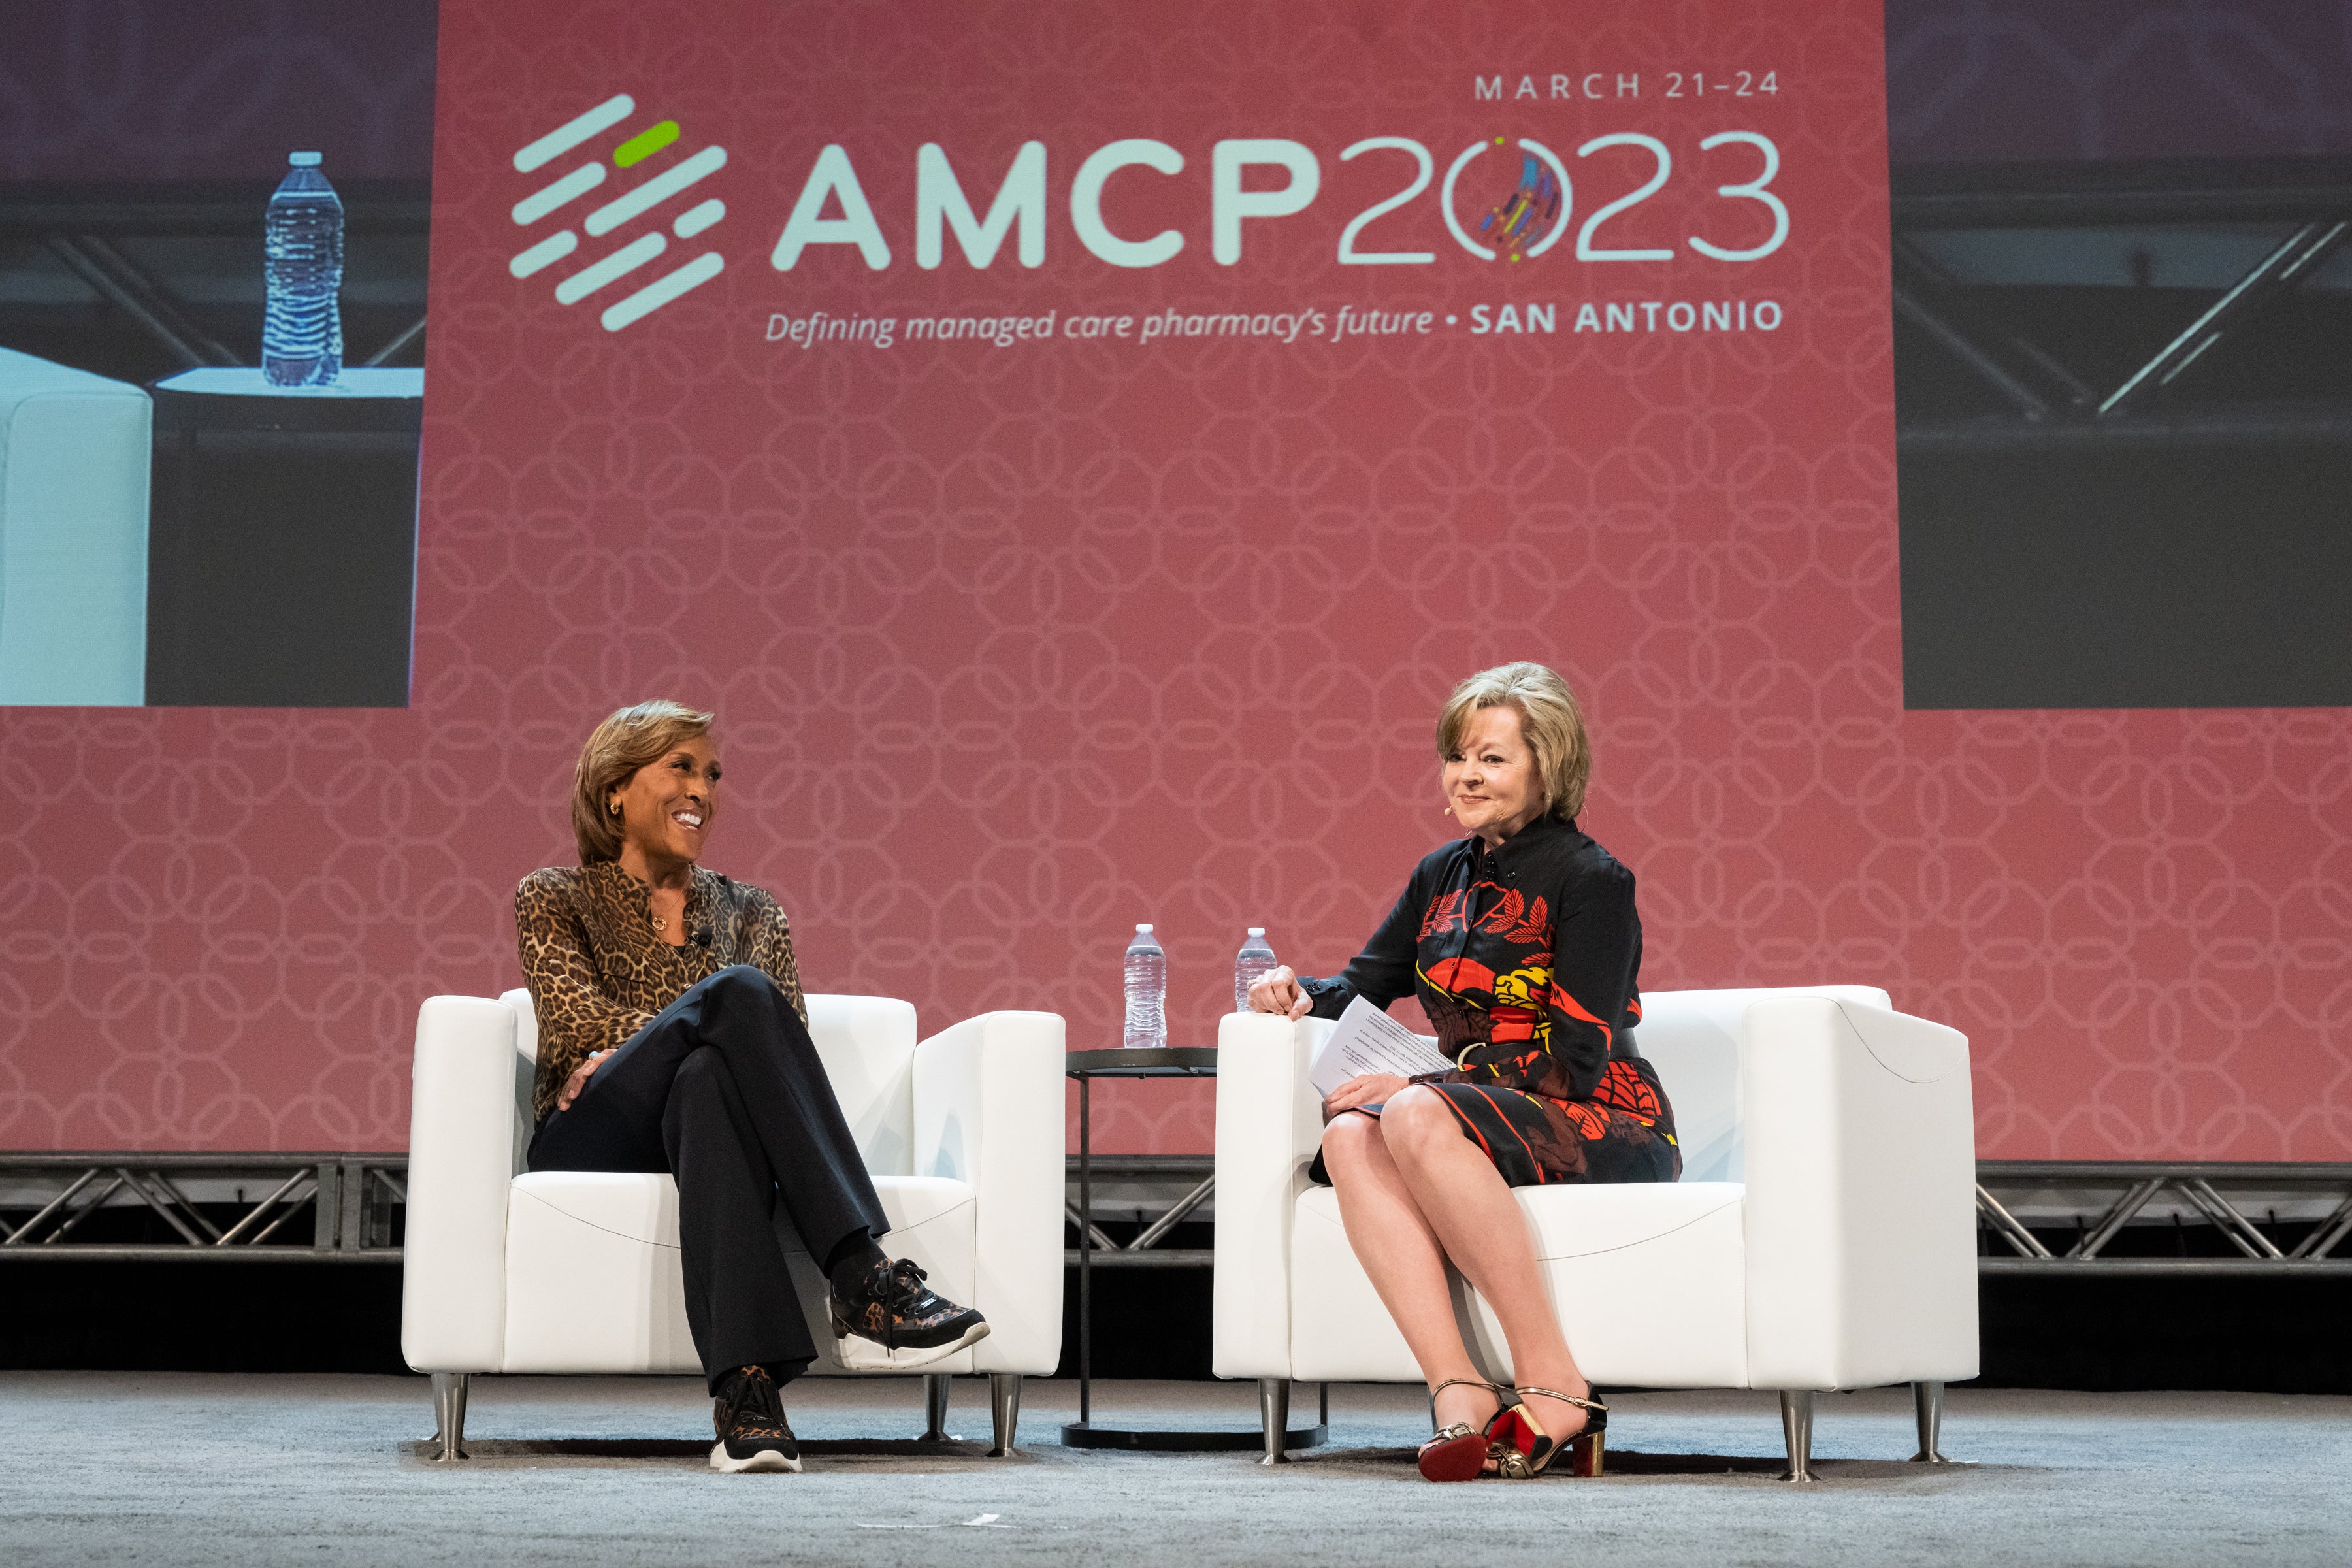 AMCP 2022 Photo Gallery